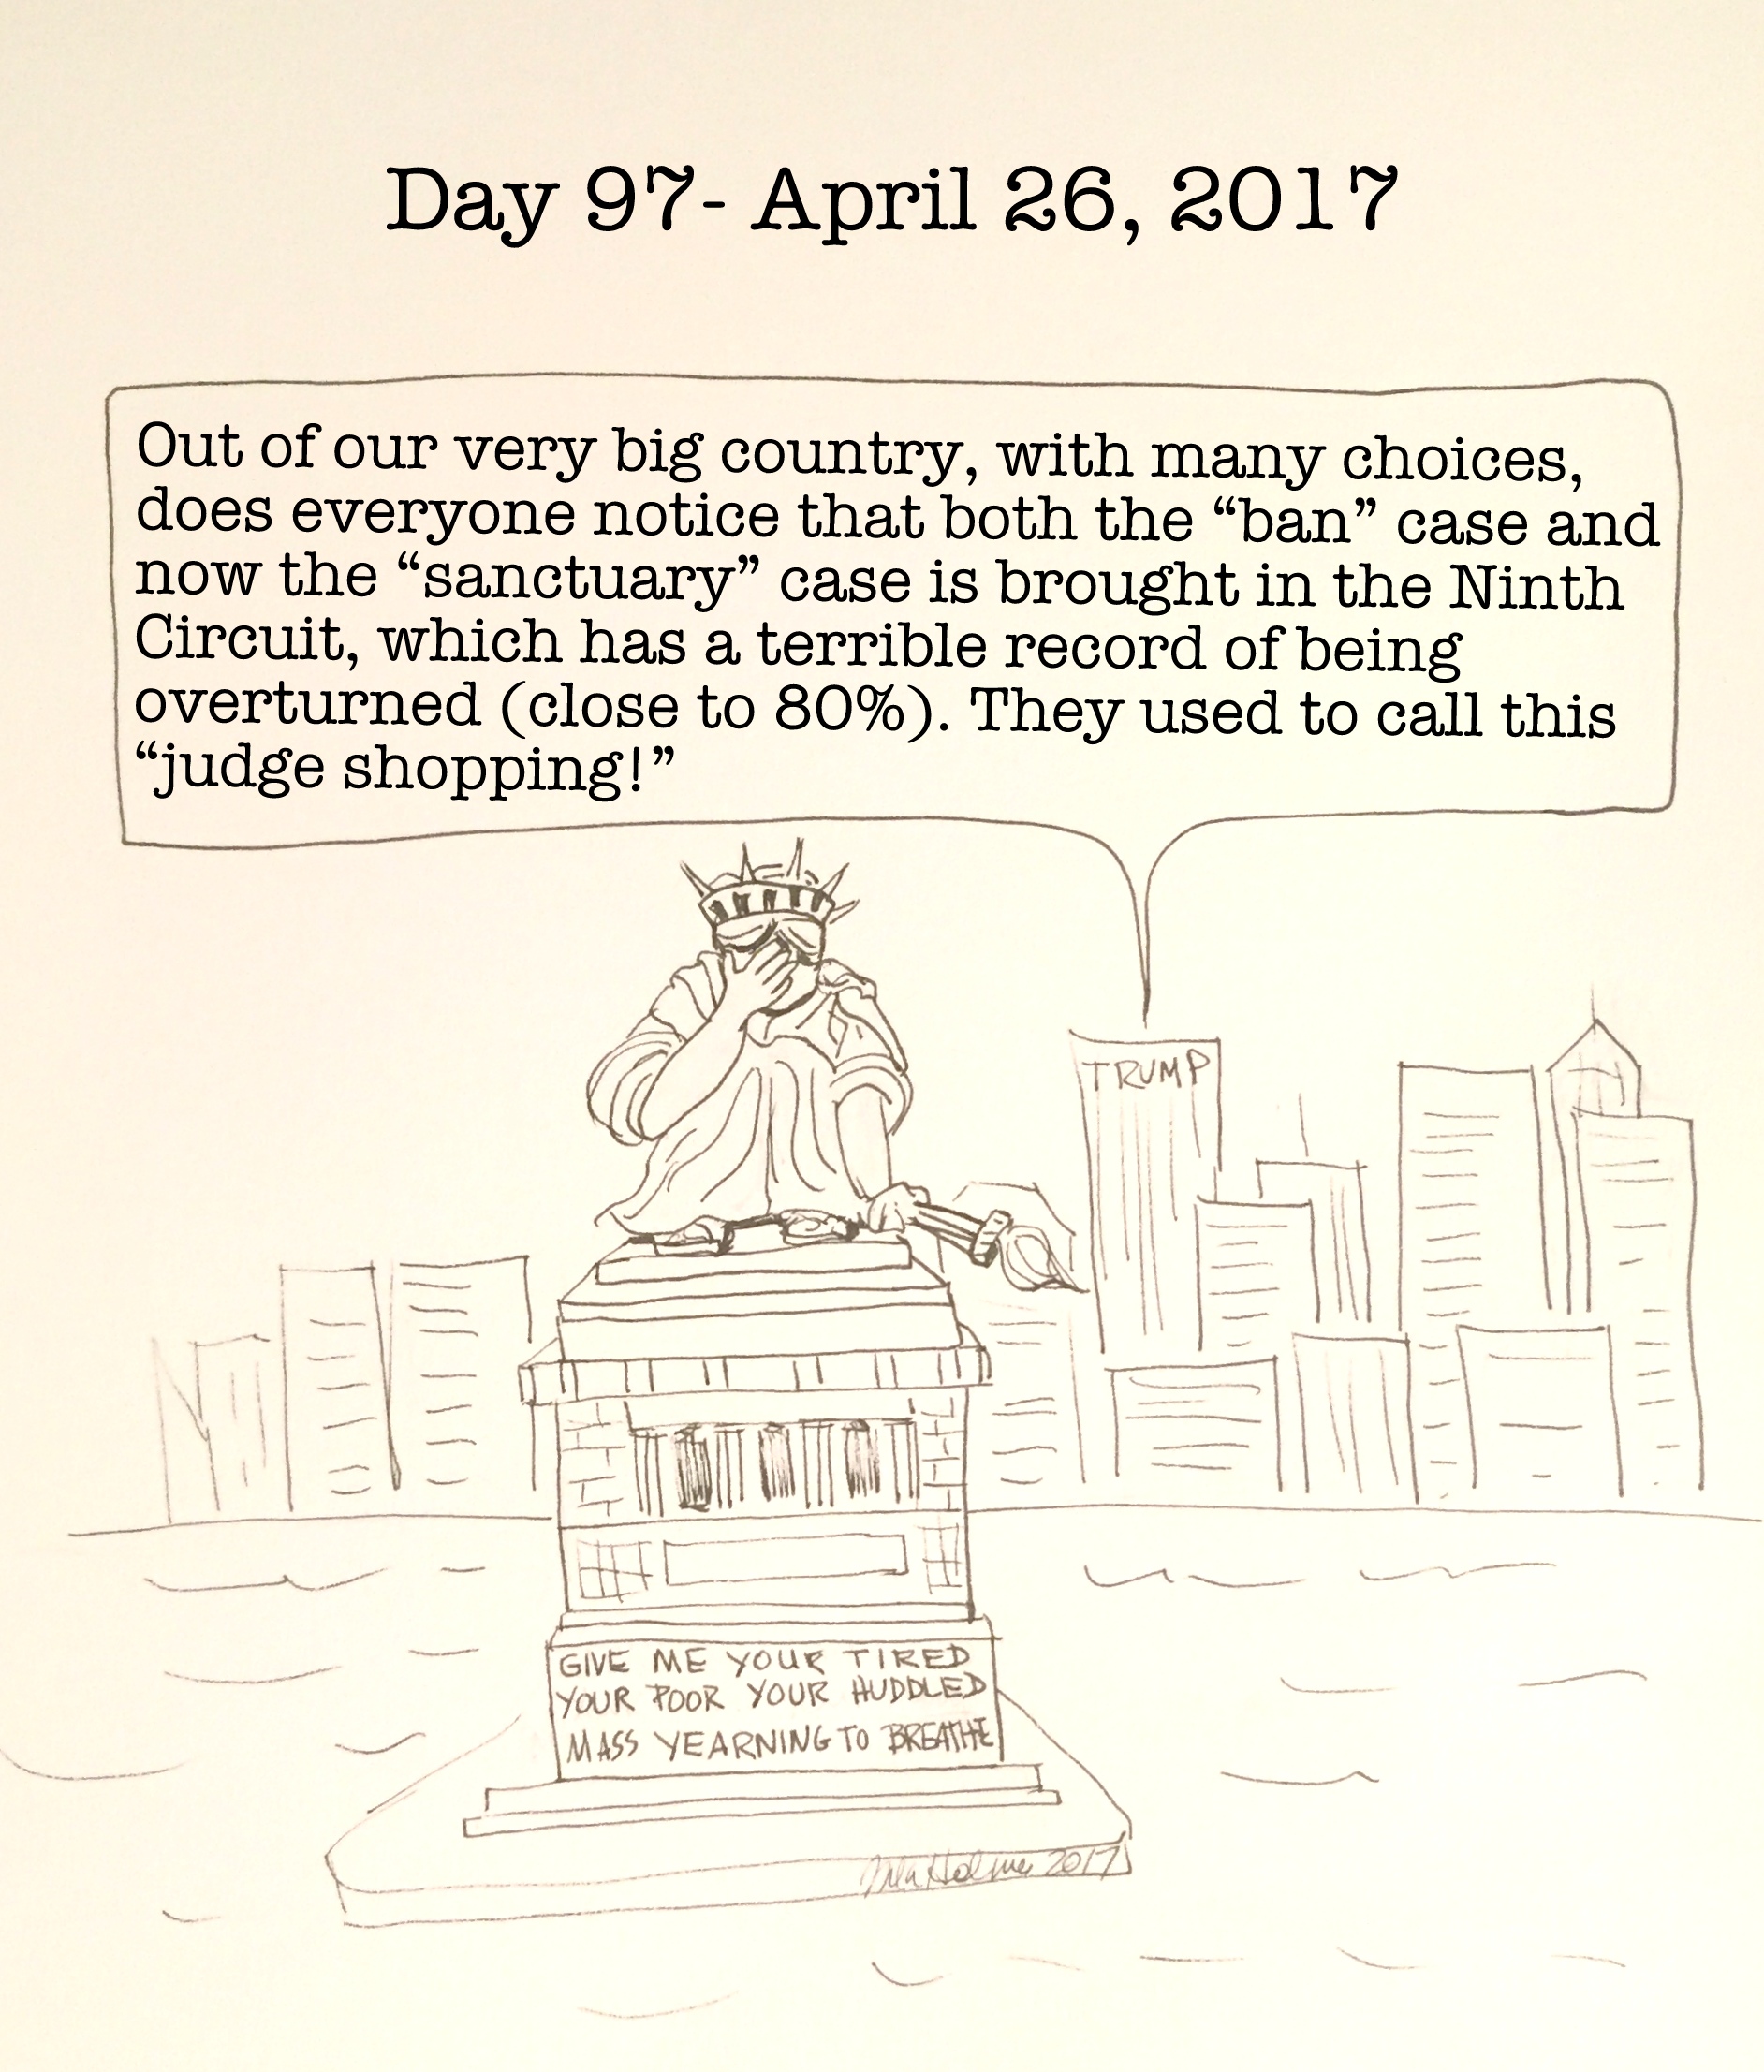 Day 97- April 26, 2017- Copyright 2017